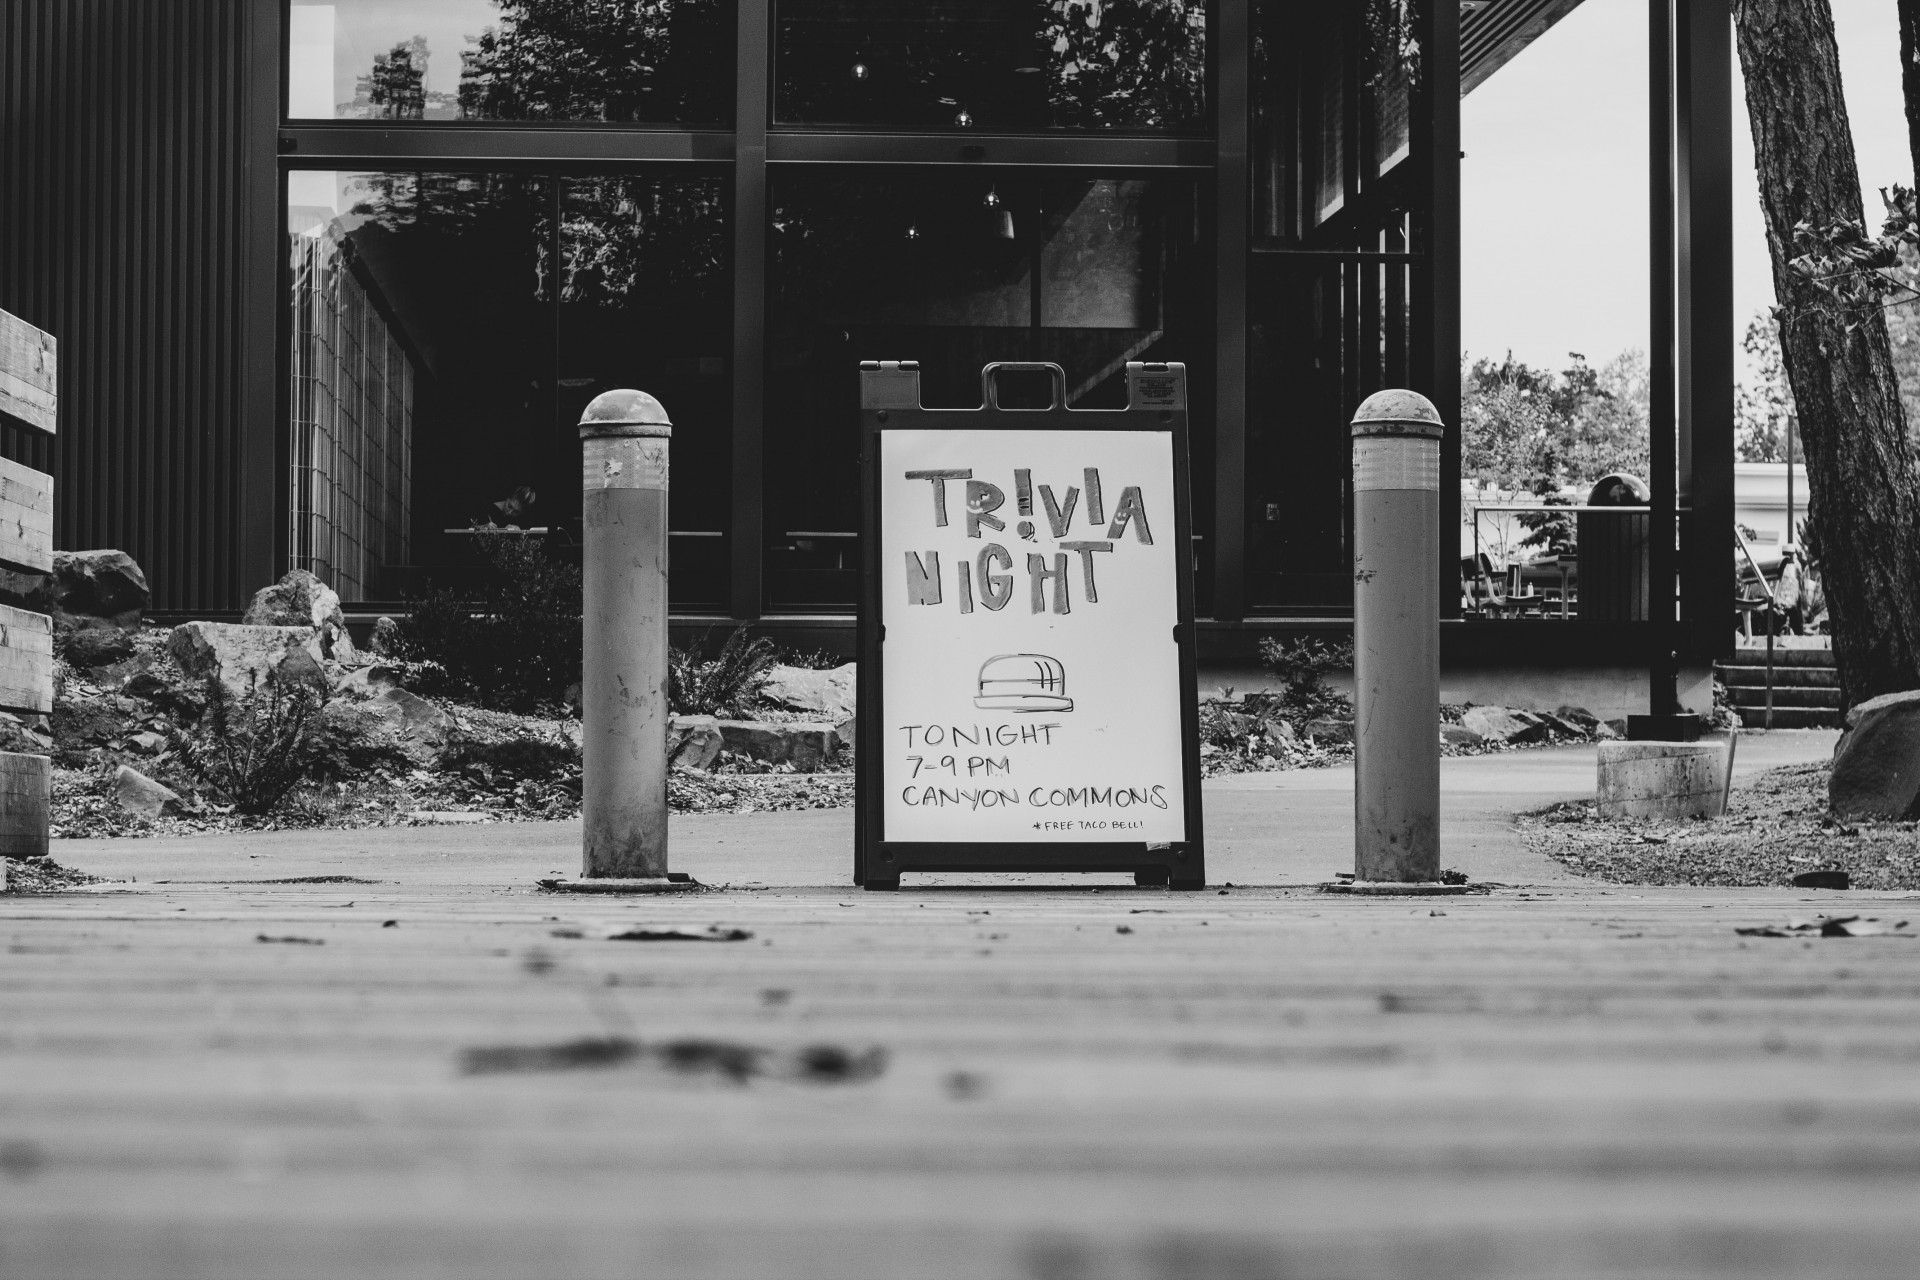  restaurant event ideas: trivia nights: example photo